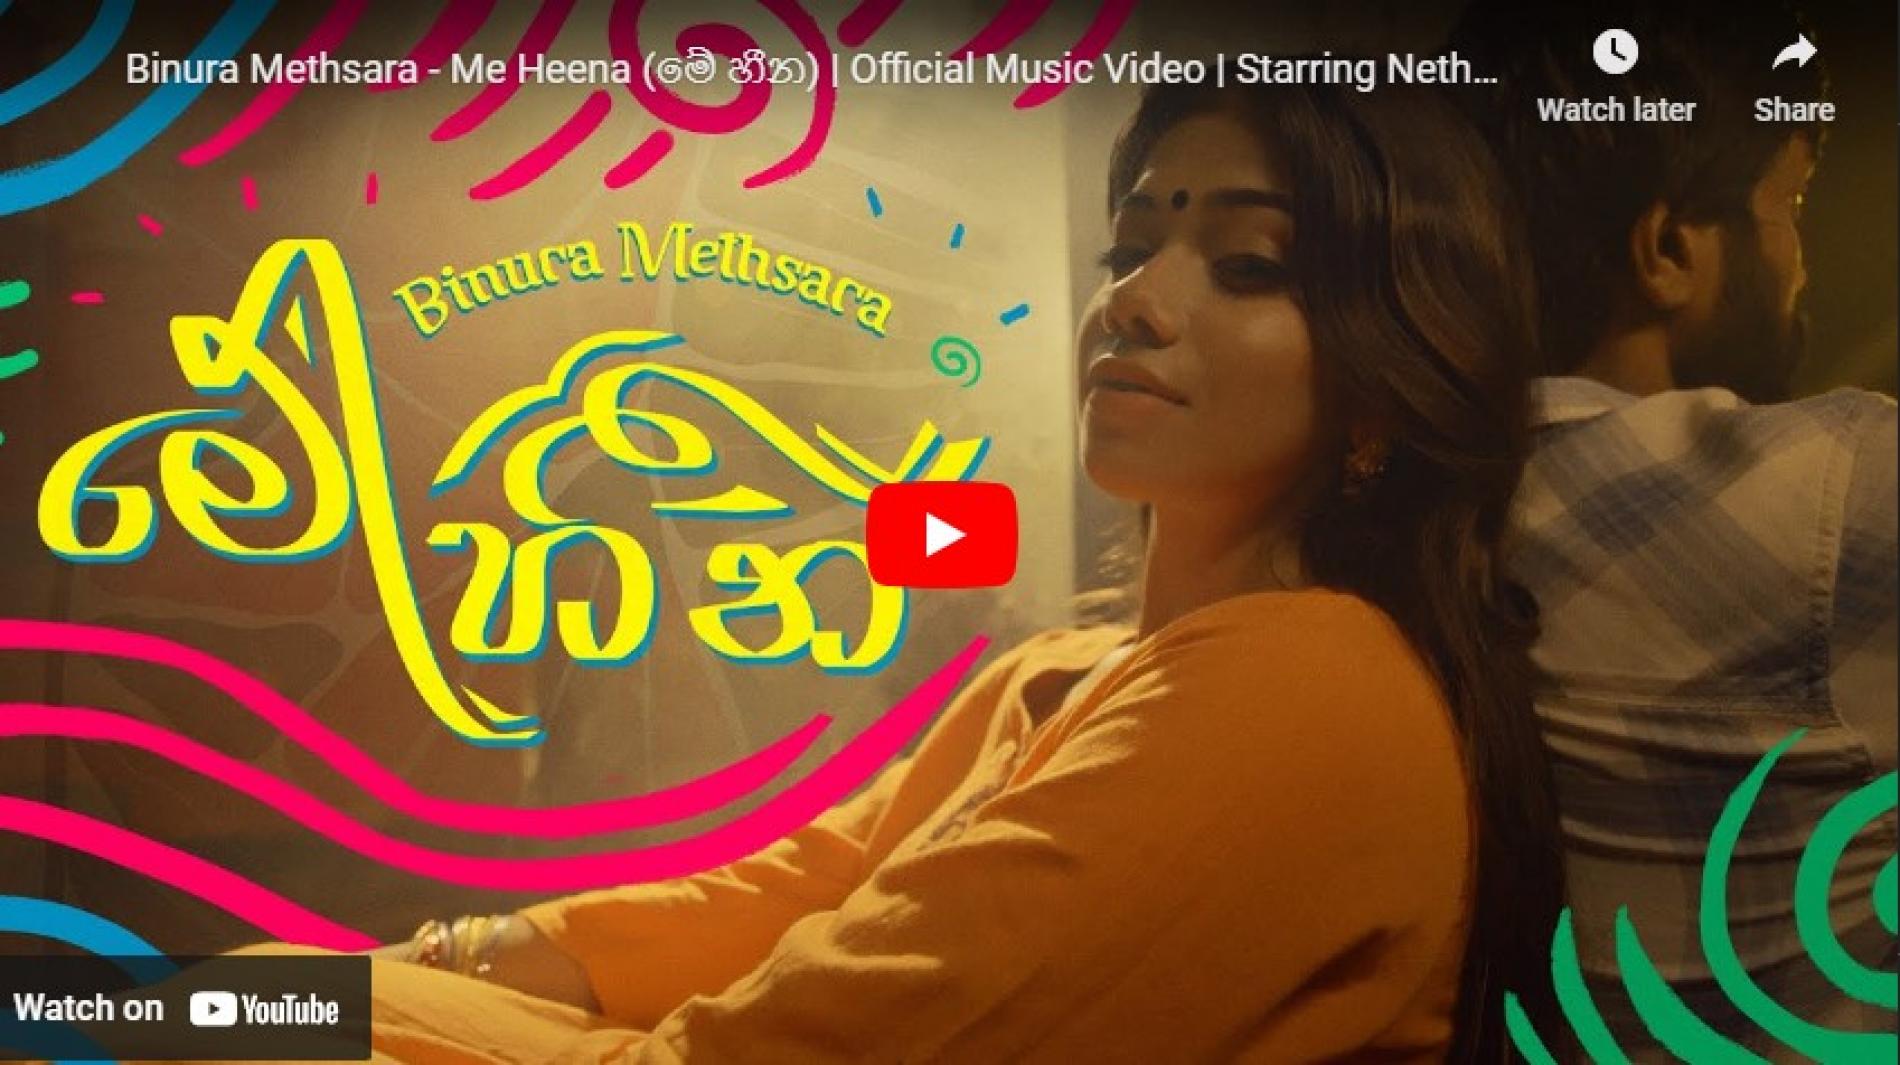 New Music : Binura Methsara – Me Heena (මේ හීන) | Official Music Video | Starring Nethmi Sathsarani